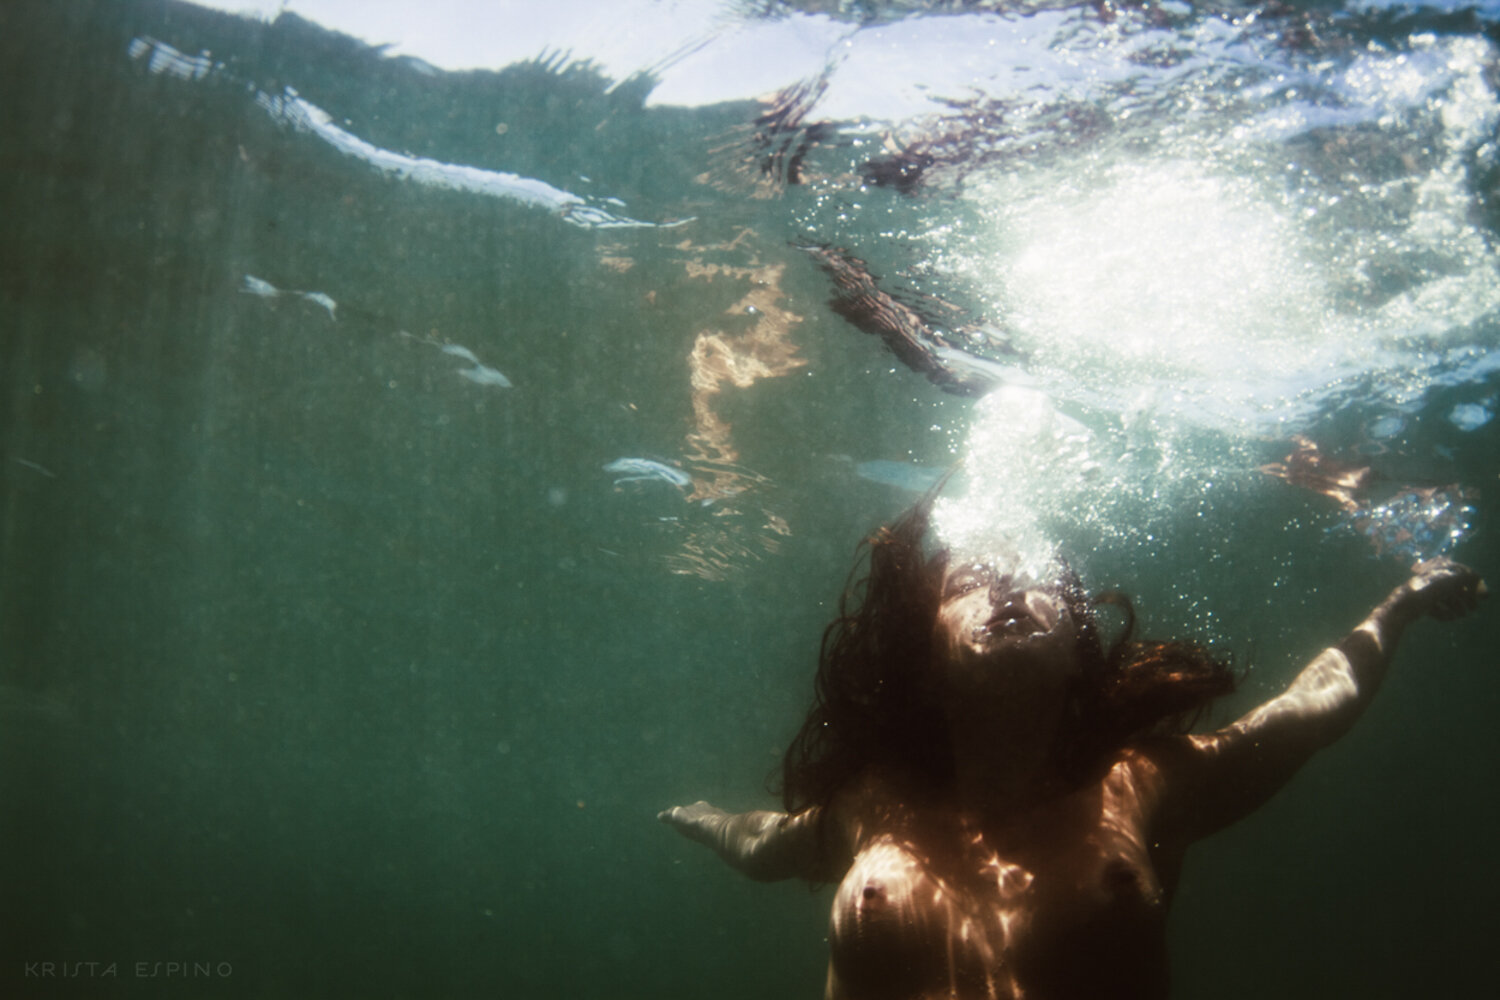 lifestyle nature photography photographer krista espino underwater nude ocean wave mermaid siren woman laguna beach california-10.jpg